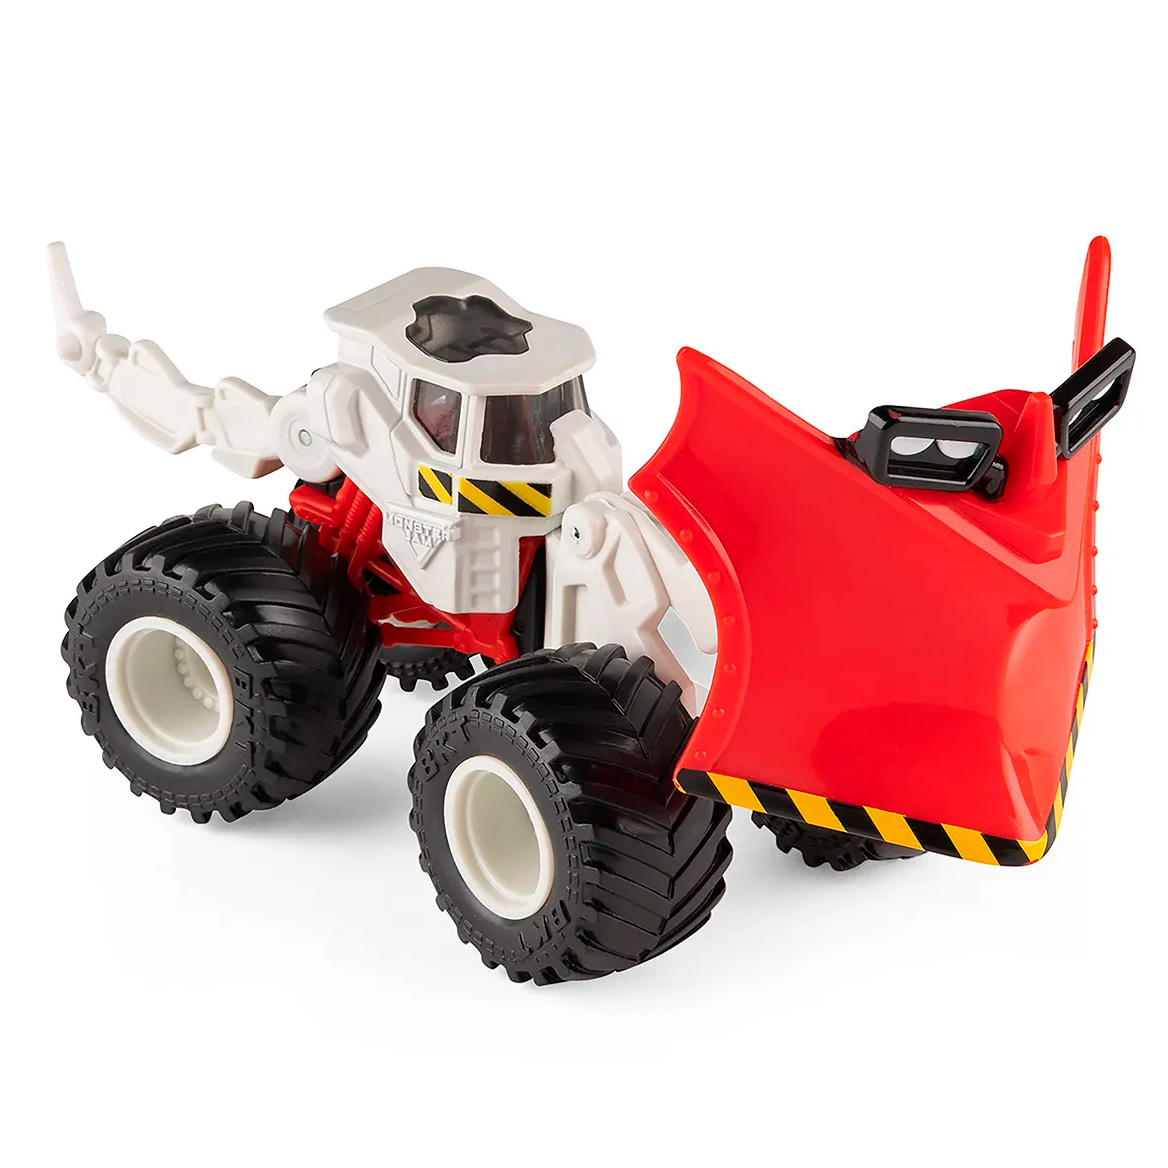 Акция на Машинка Monster Jam Dirt squad Wedge білий з червоним 1:64 (6055226-1) от Будинок іграшок